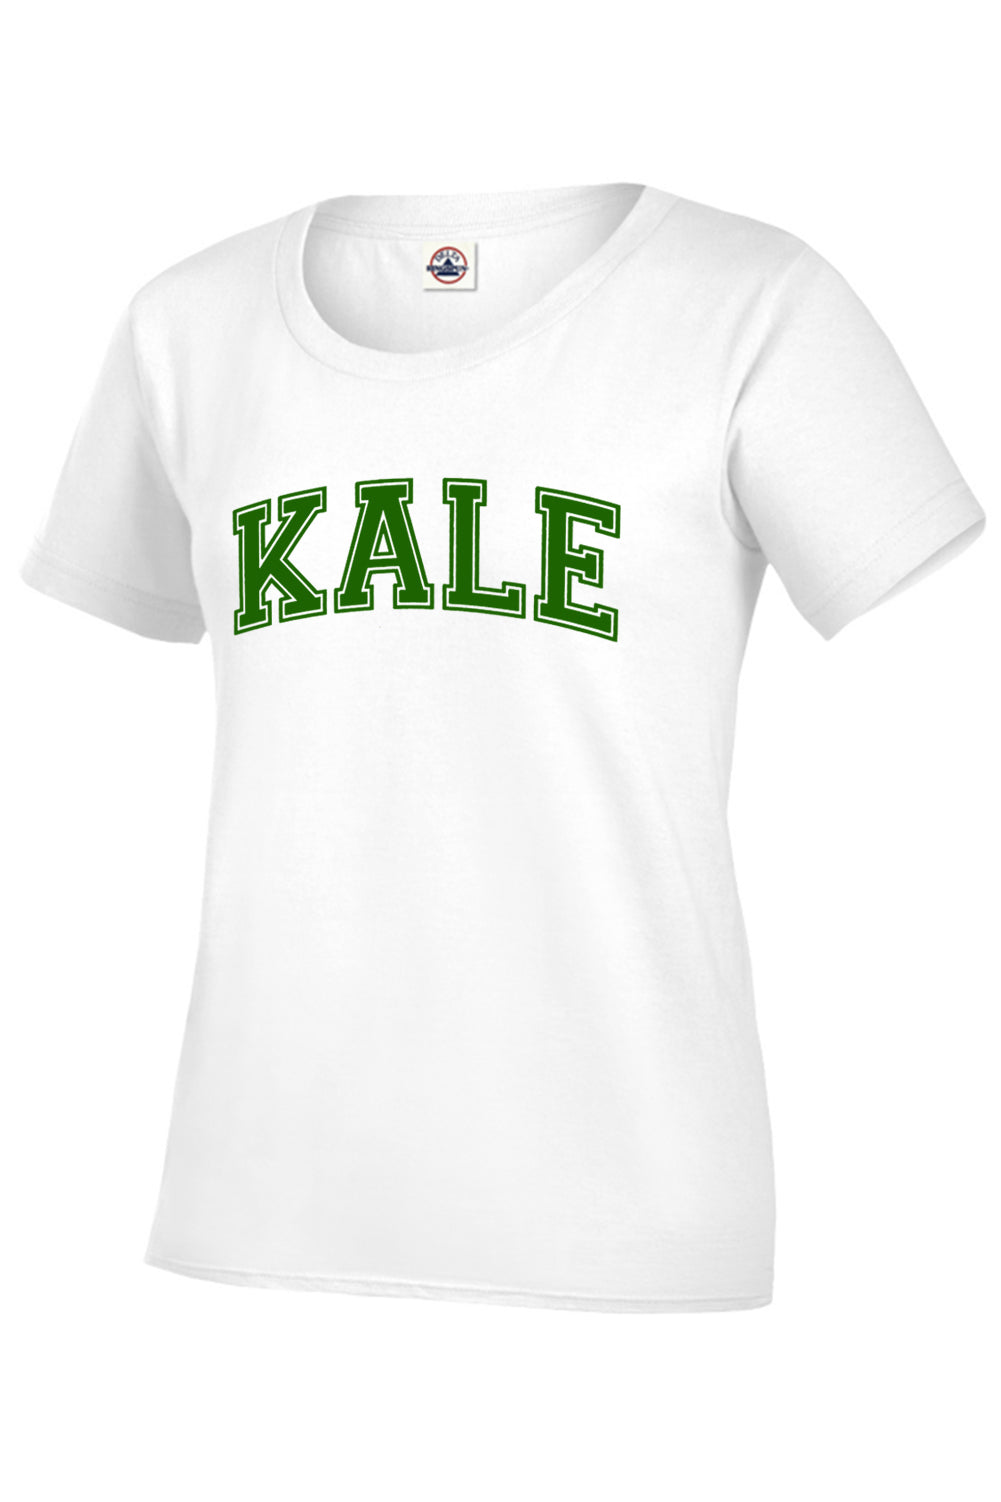 Kale - Kale Girl's T-Shirt